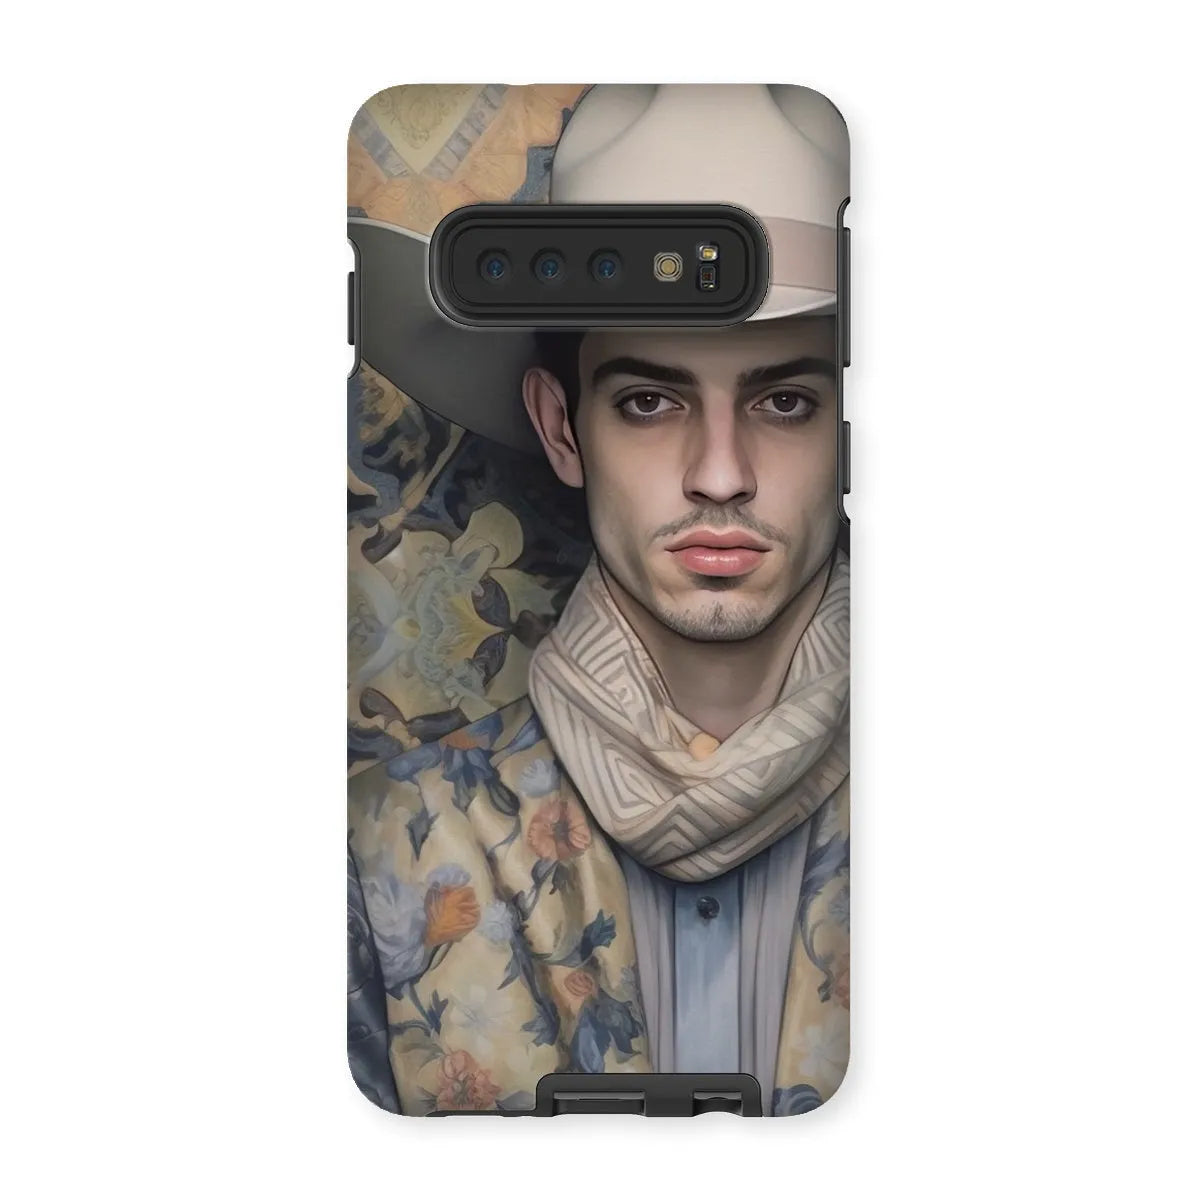 Farzad The Gay Cowboy - Dandy Gay Men Art Phone Case - Samsung Galaxy S10 / Matte - Mobile Phone Cases - Aesthetic Art